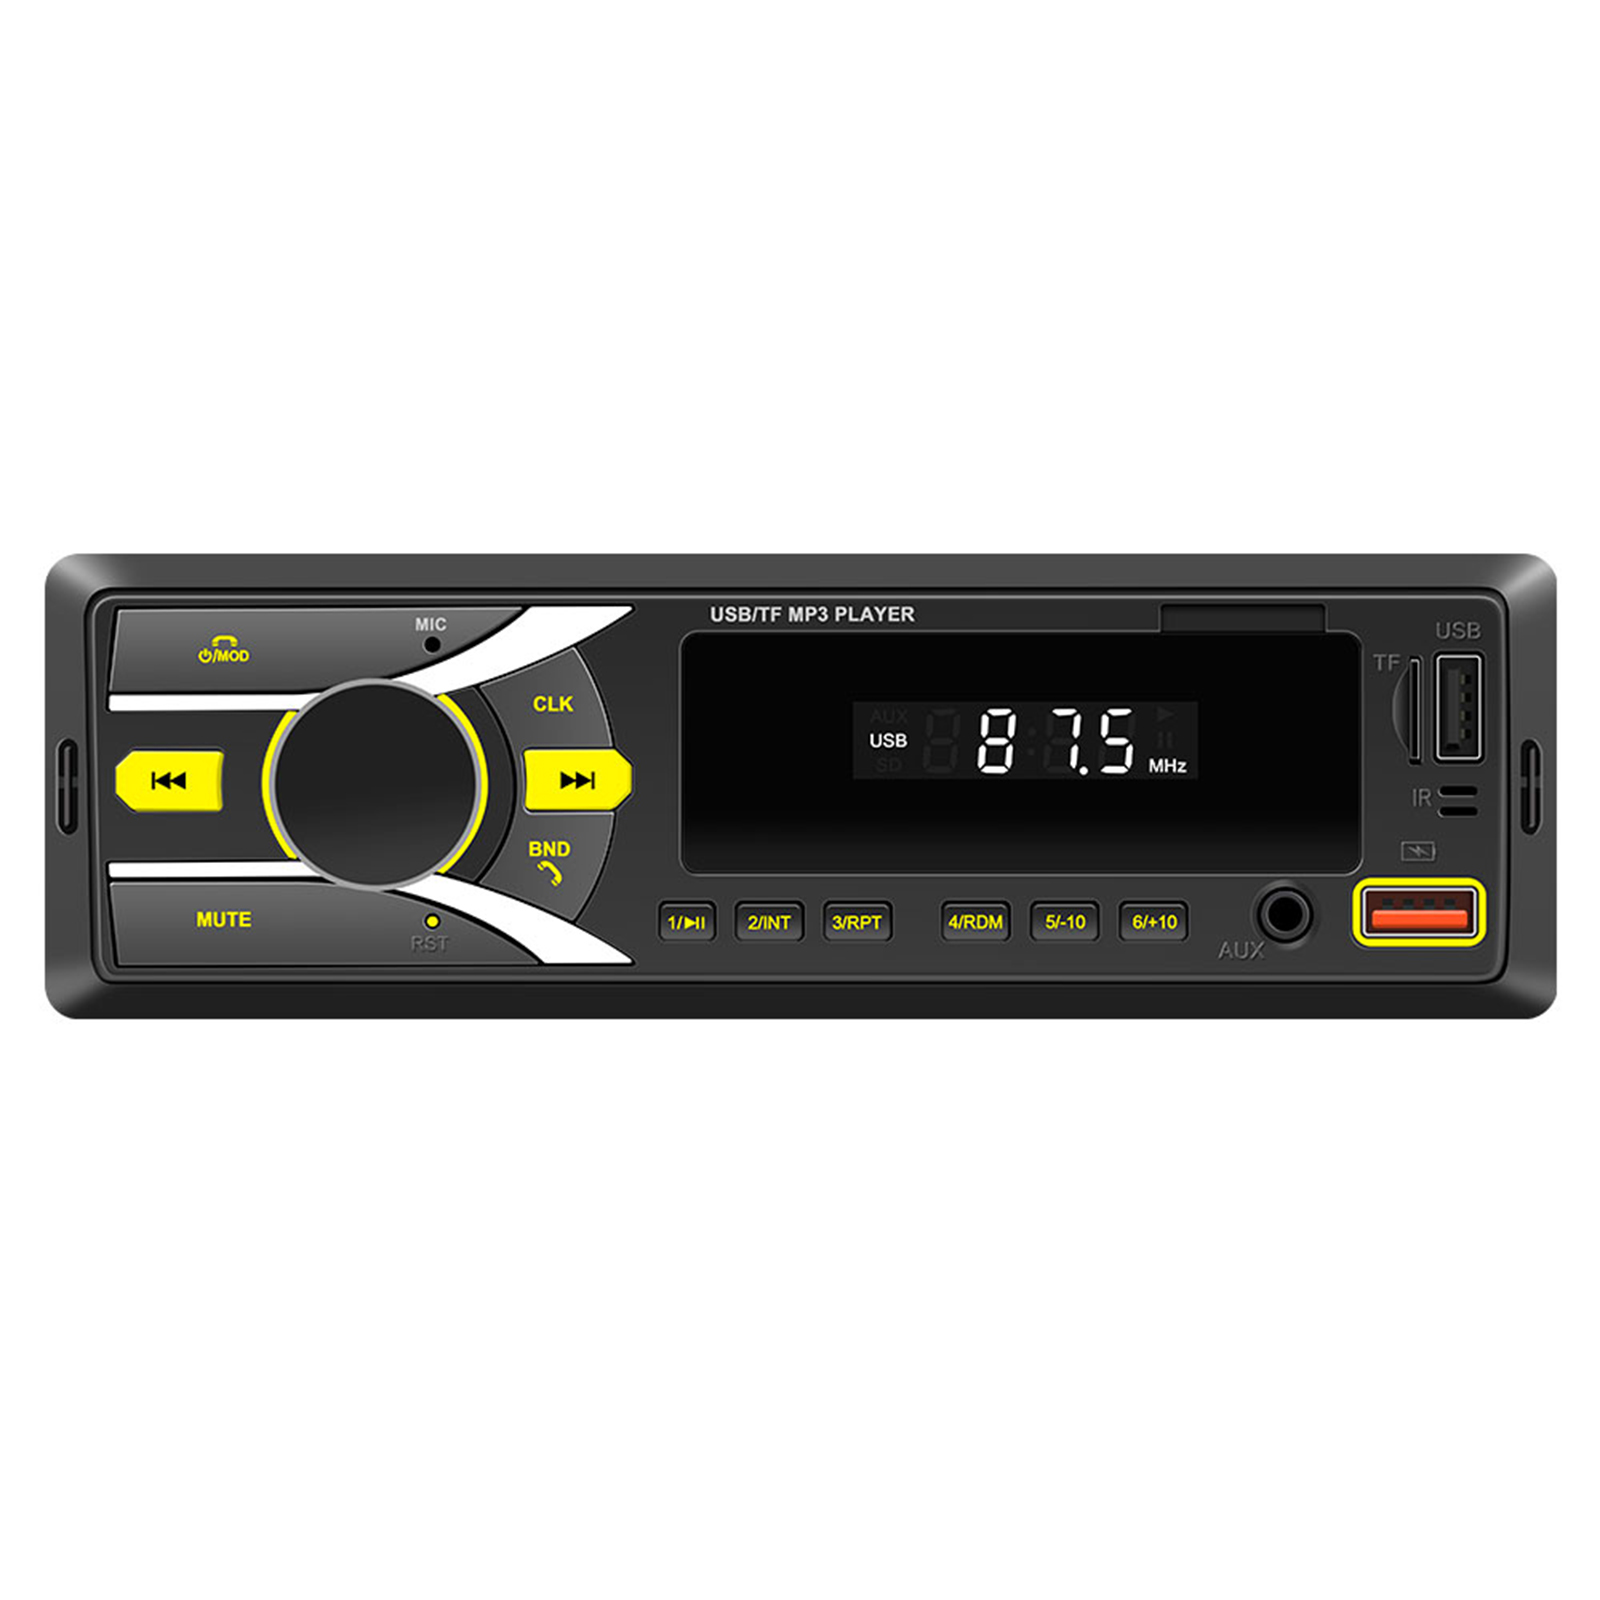 Bluetooth Car Fm Radio Rca Audio Subwoofer Sound Source Copy U Disk Card Reader Usb Mp3 Player